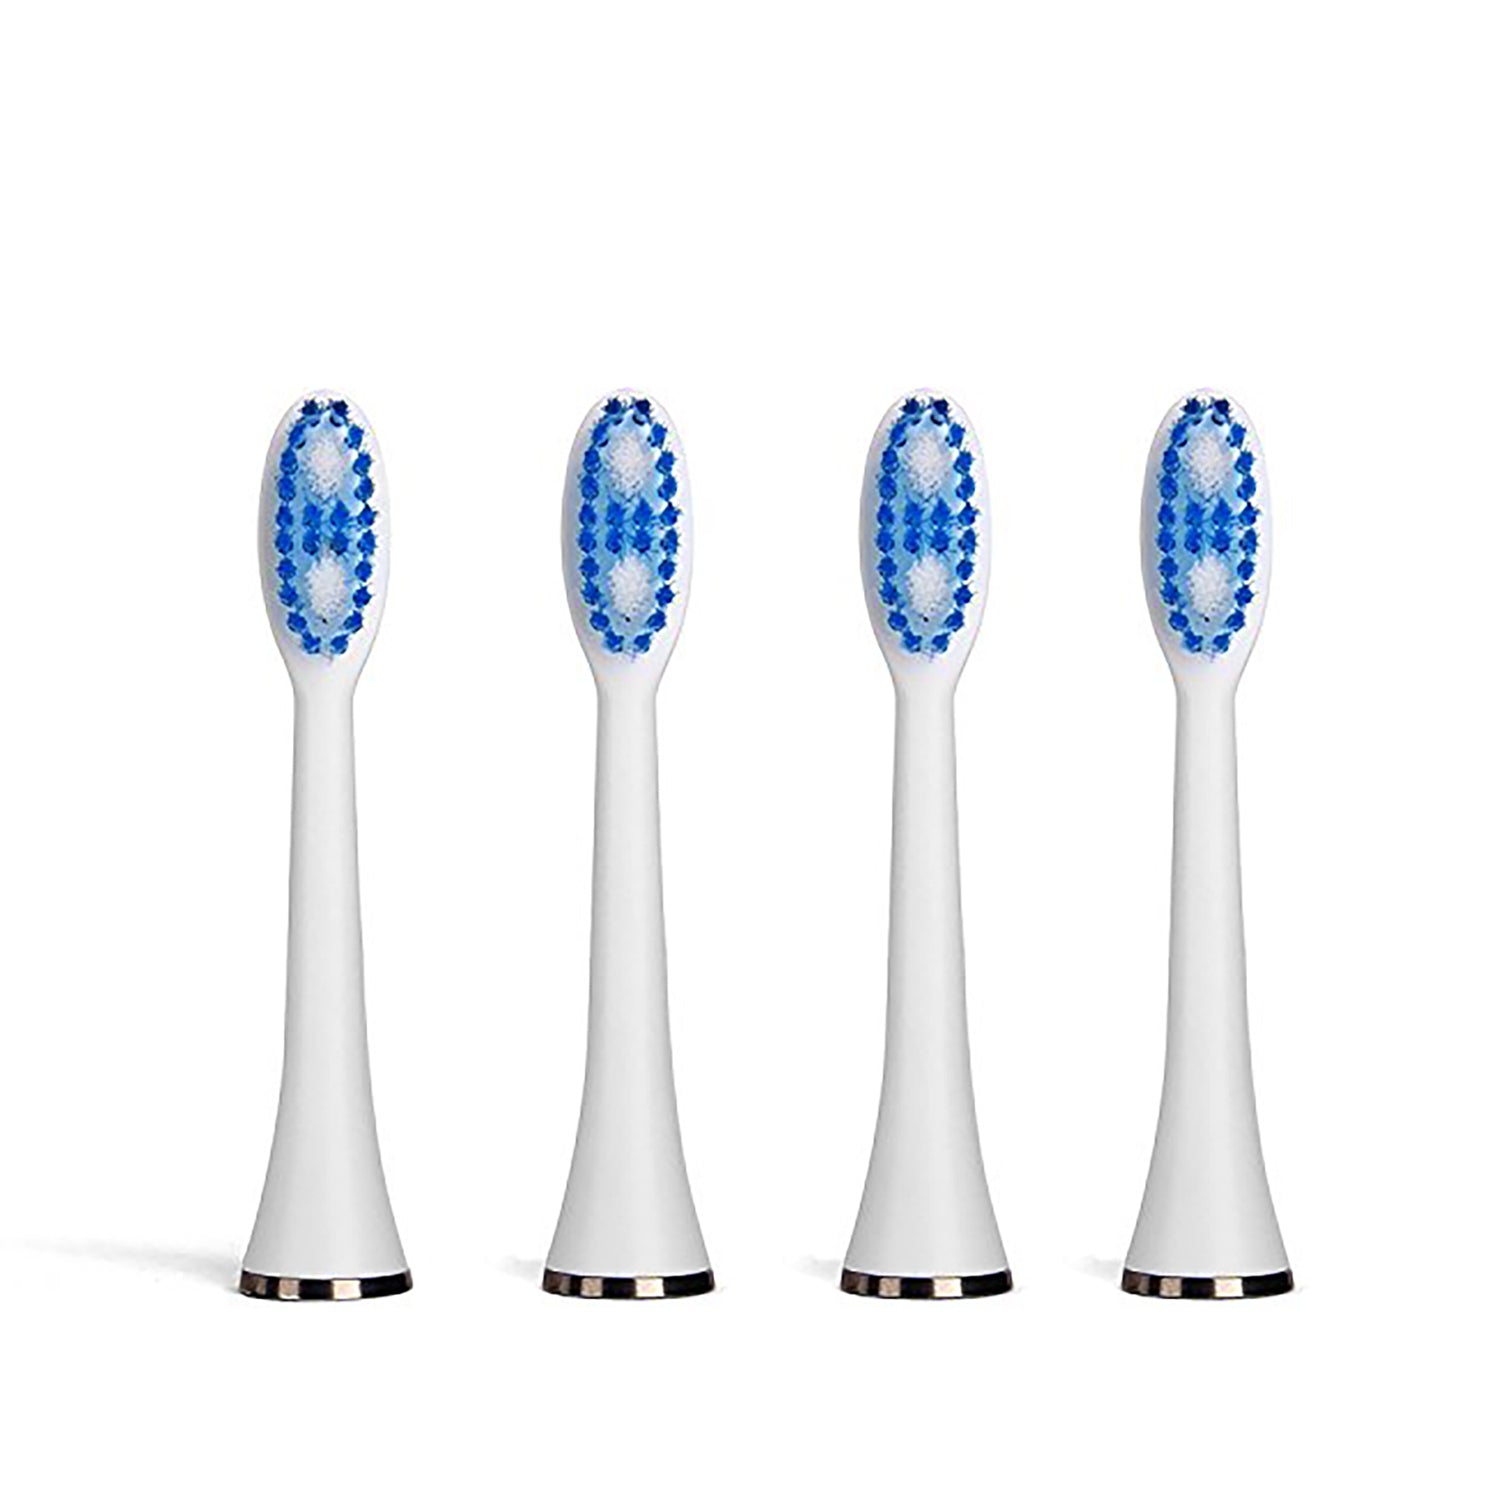 SweetLF Electric Toothbrush Heads White